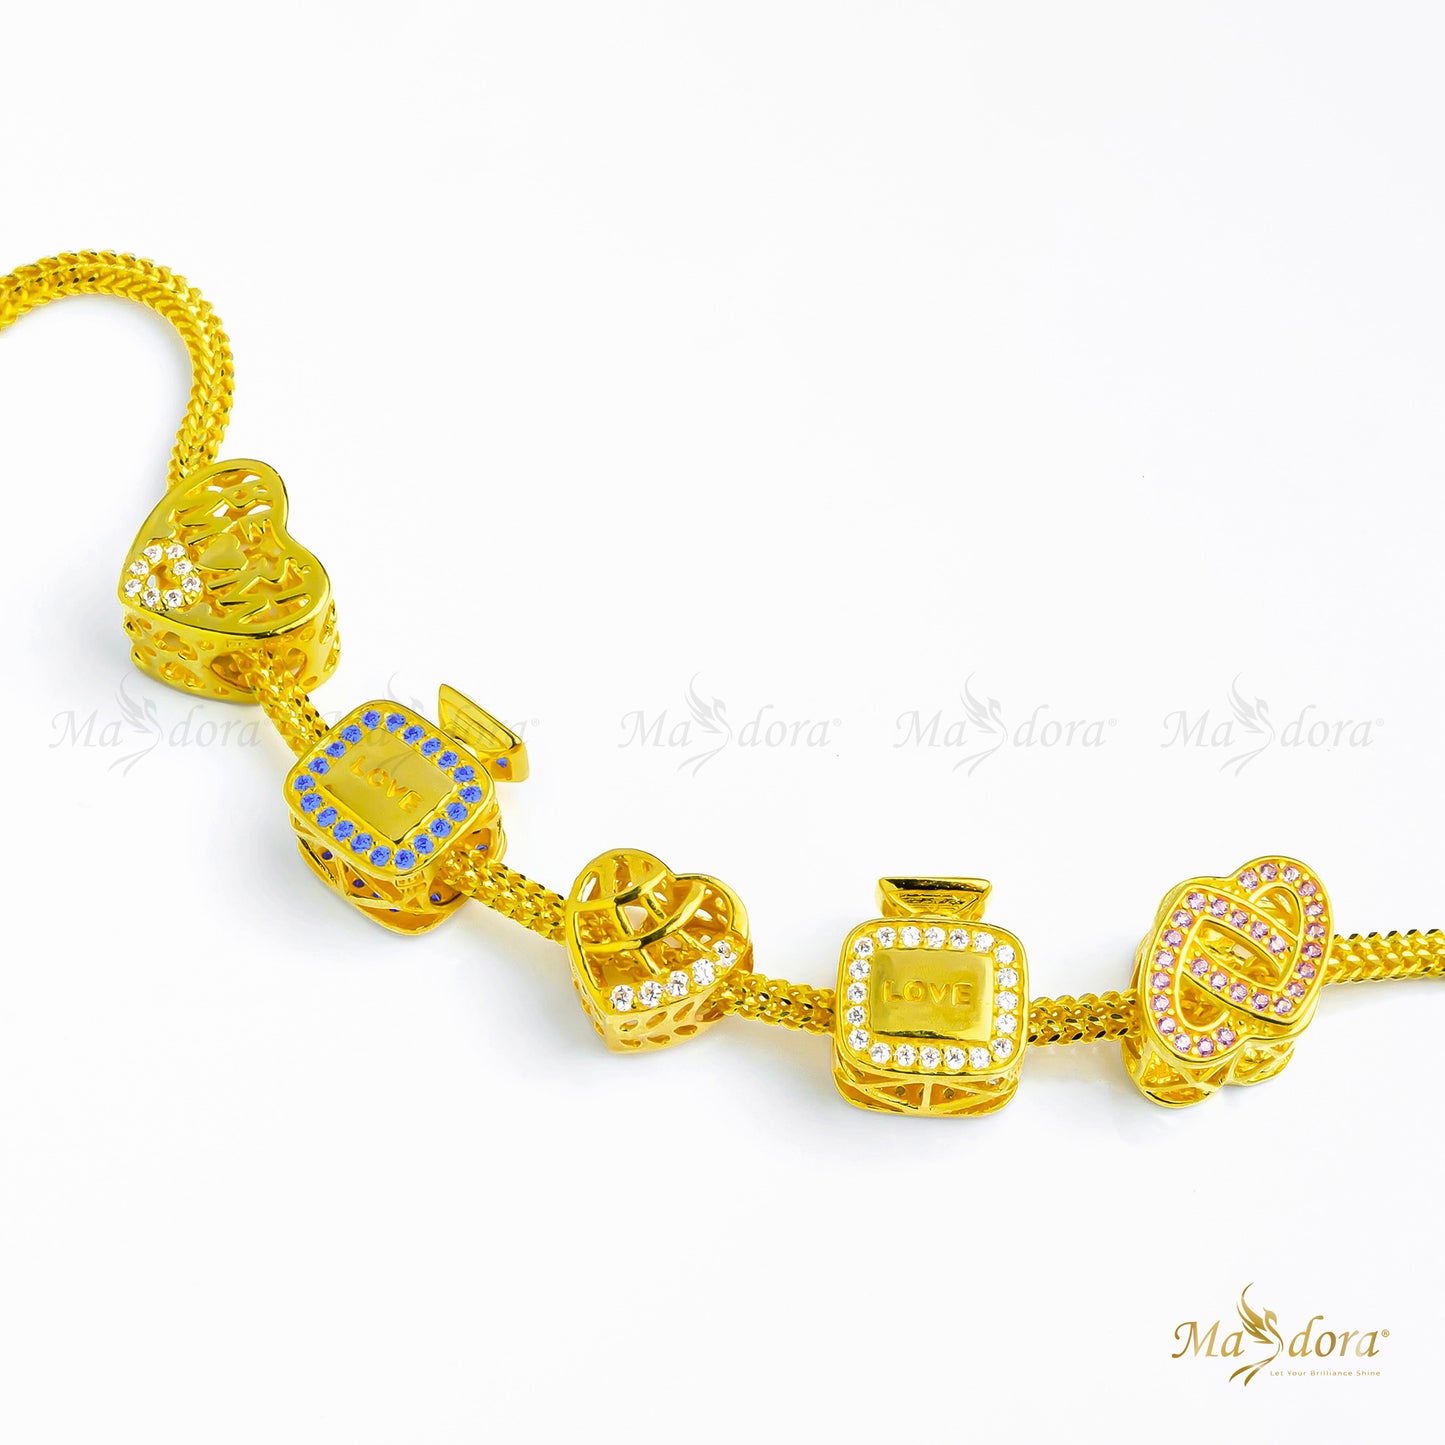 Masdora Beads ~ Lovely Brands Series (Emas 916)